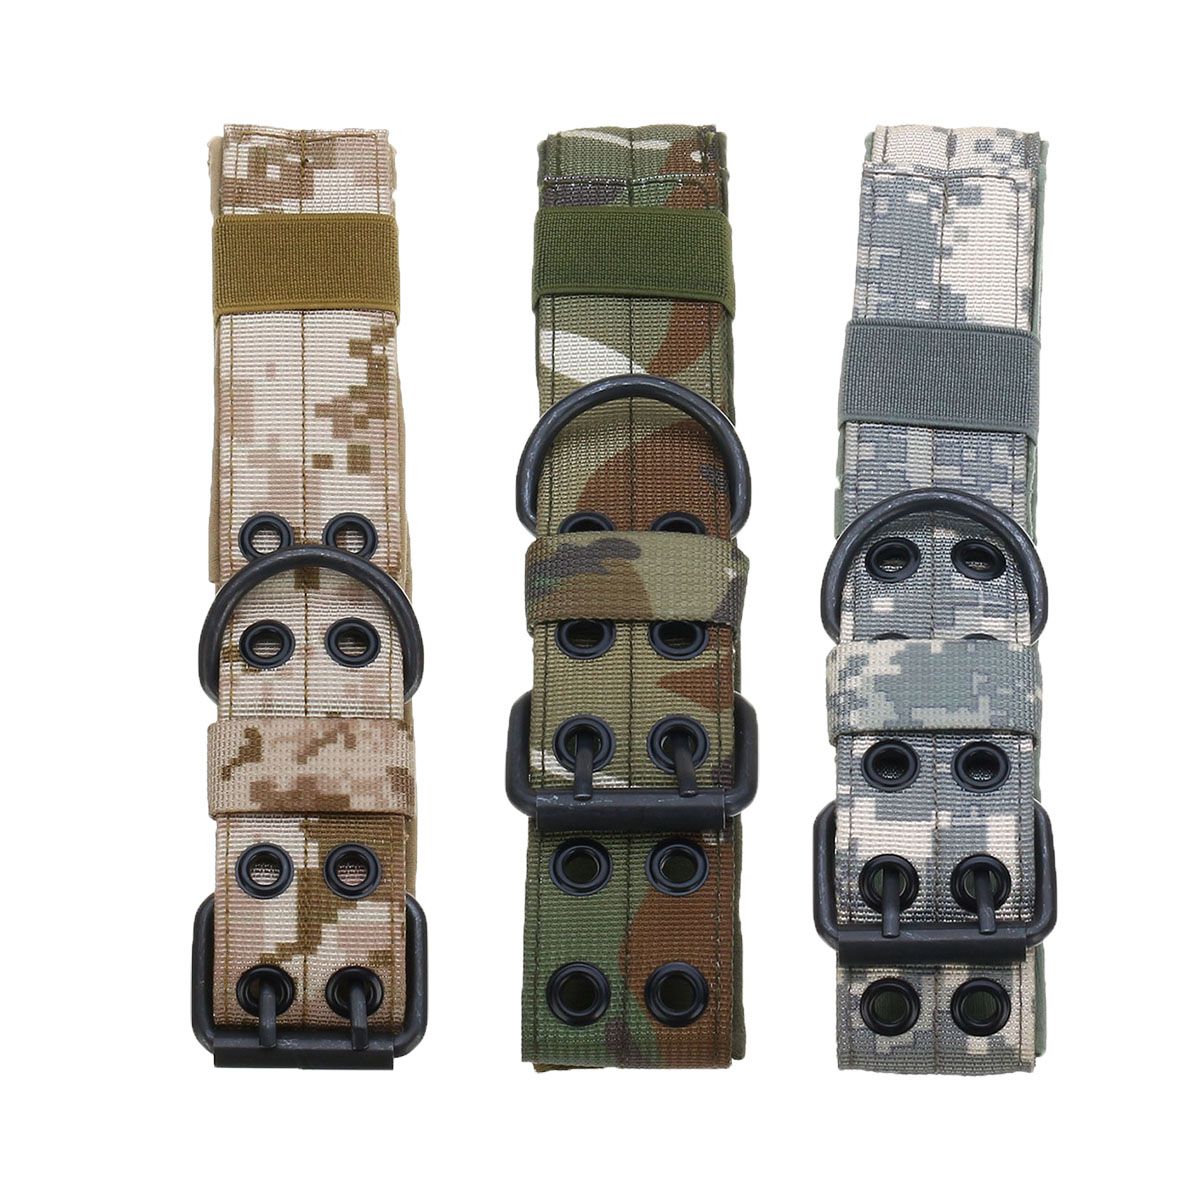 L-Tactical-Military-Adjustable-Dog-Training-Collar-Nylon-Leash-wMetal-Buckle-1393986